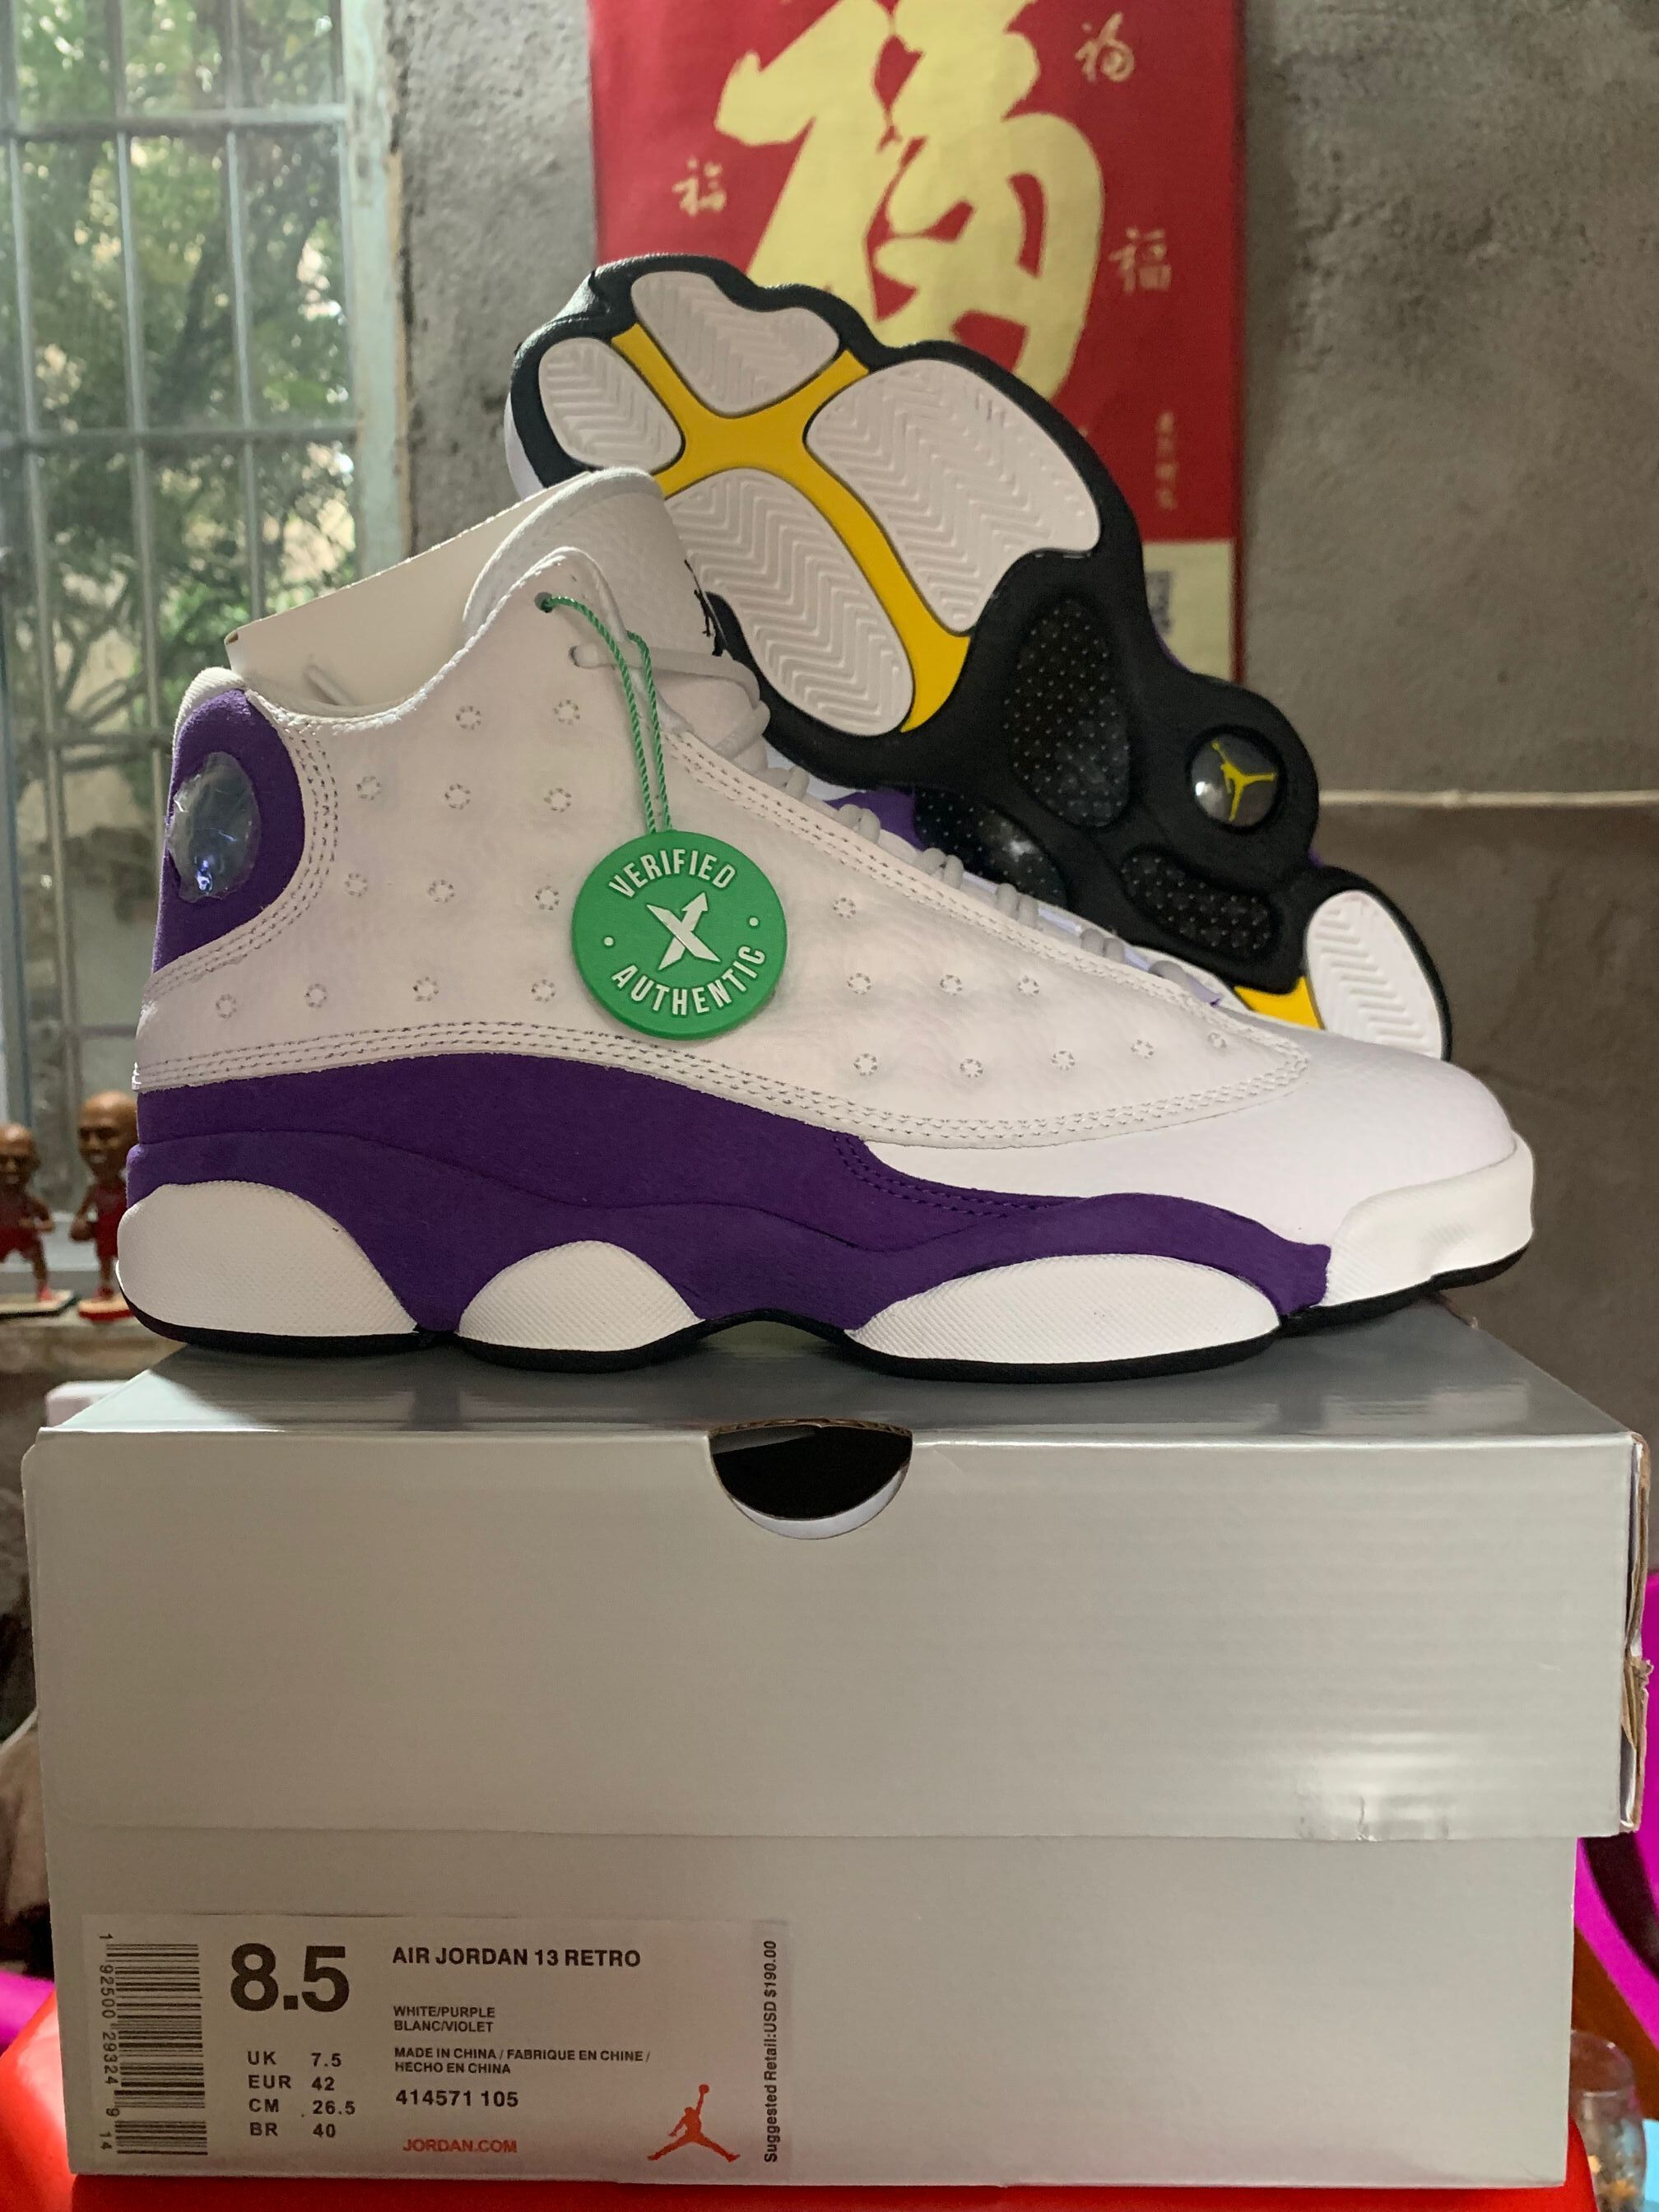 2019 Air Jordan 13 Lakers White Purple Yellow Shoes